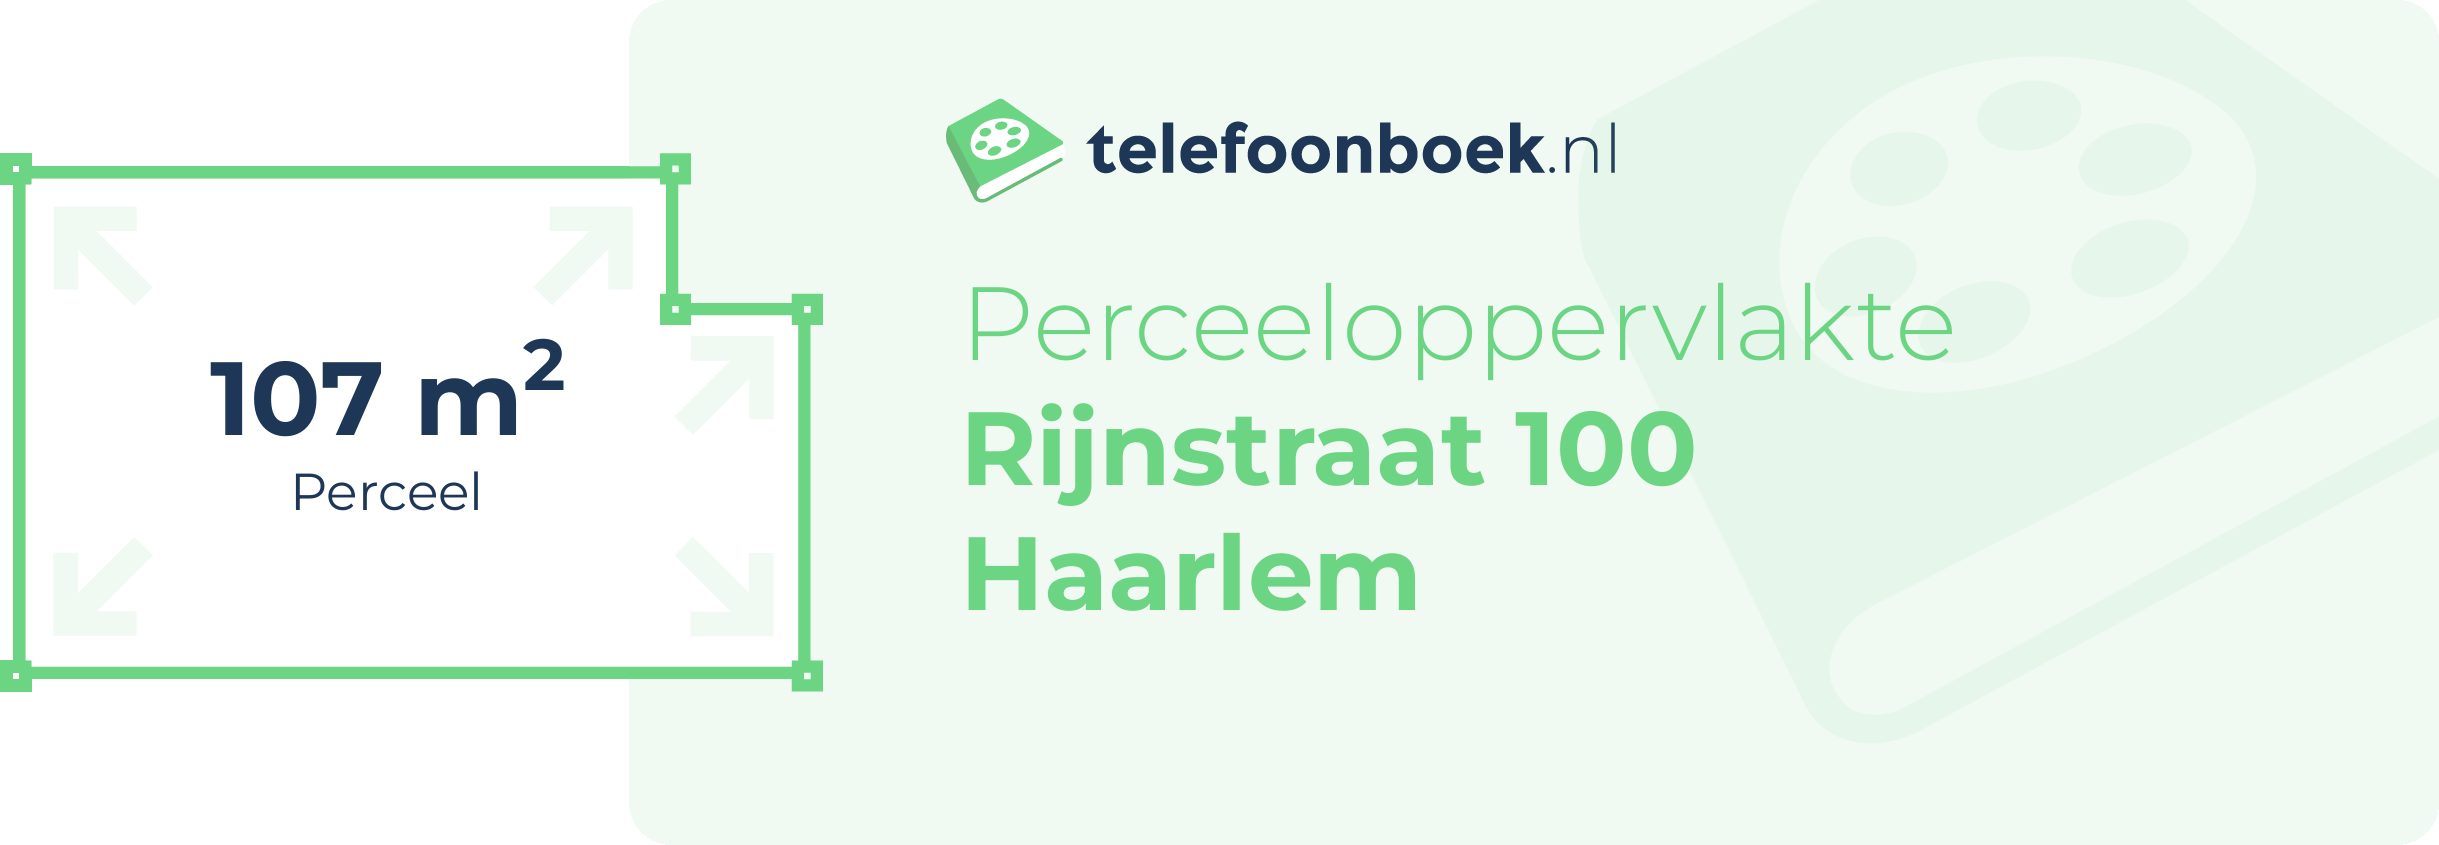 Perceeloppervlakte Rijnstraat 100 Haarlem